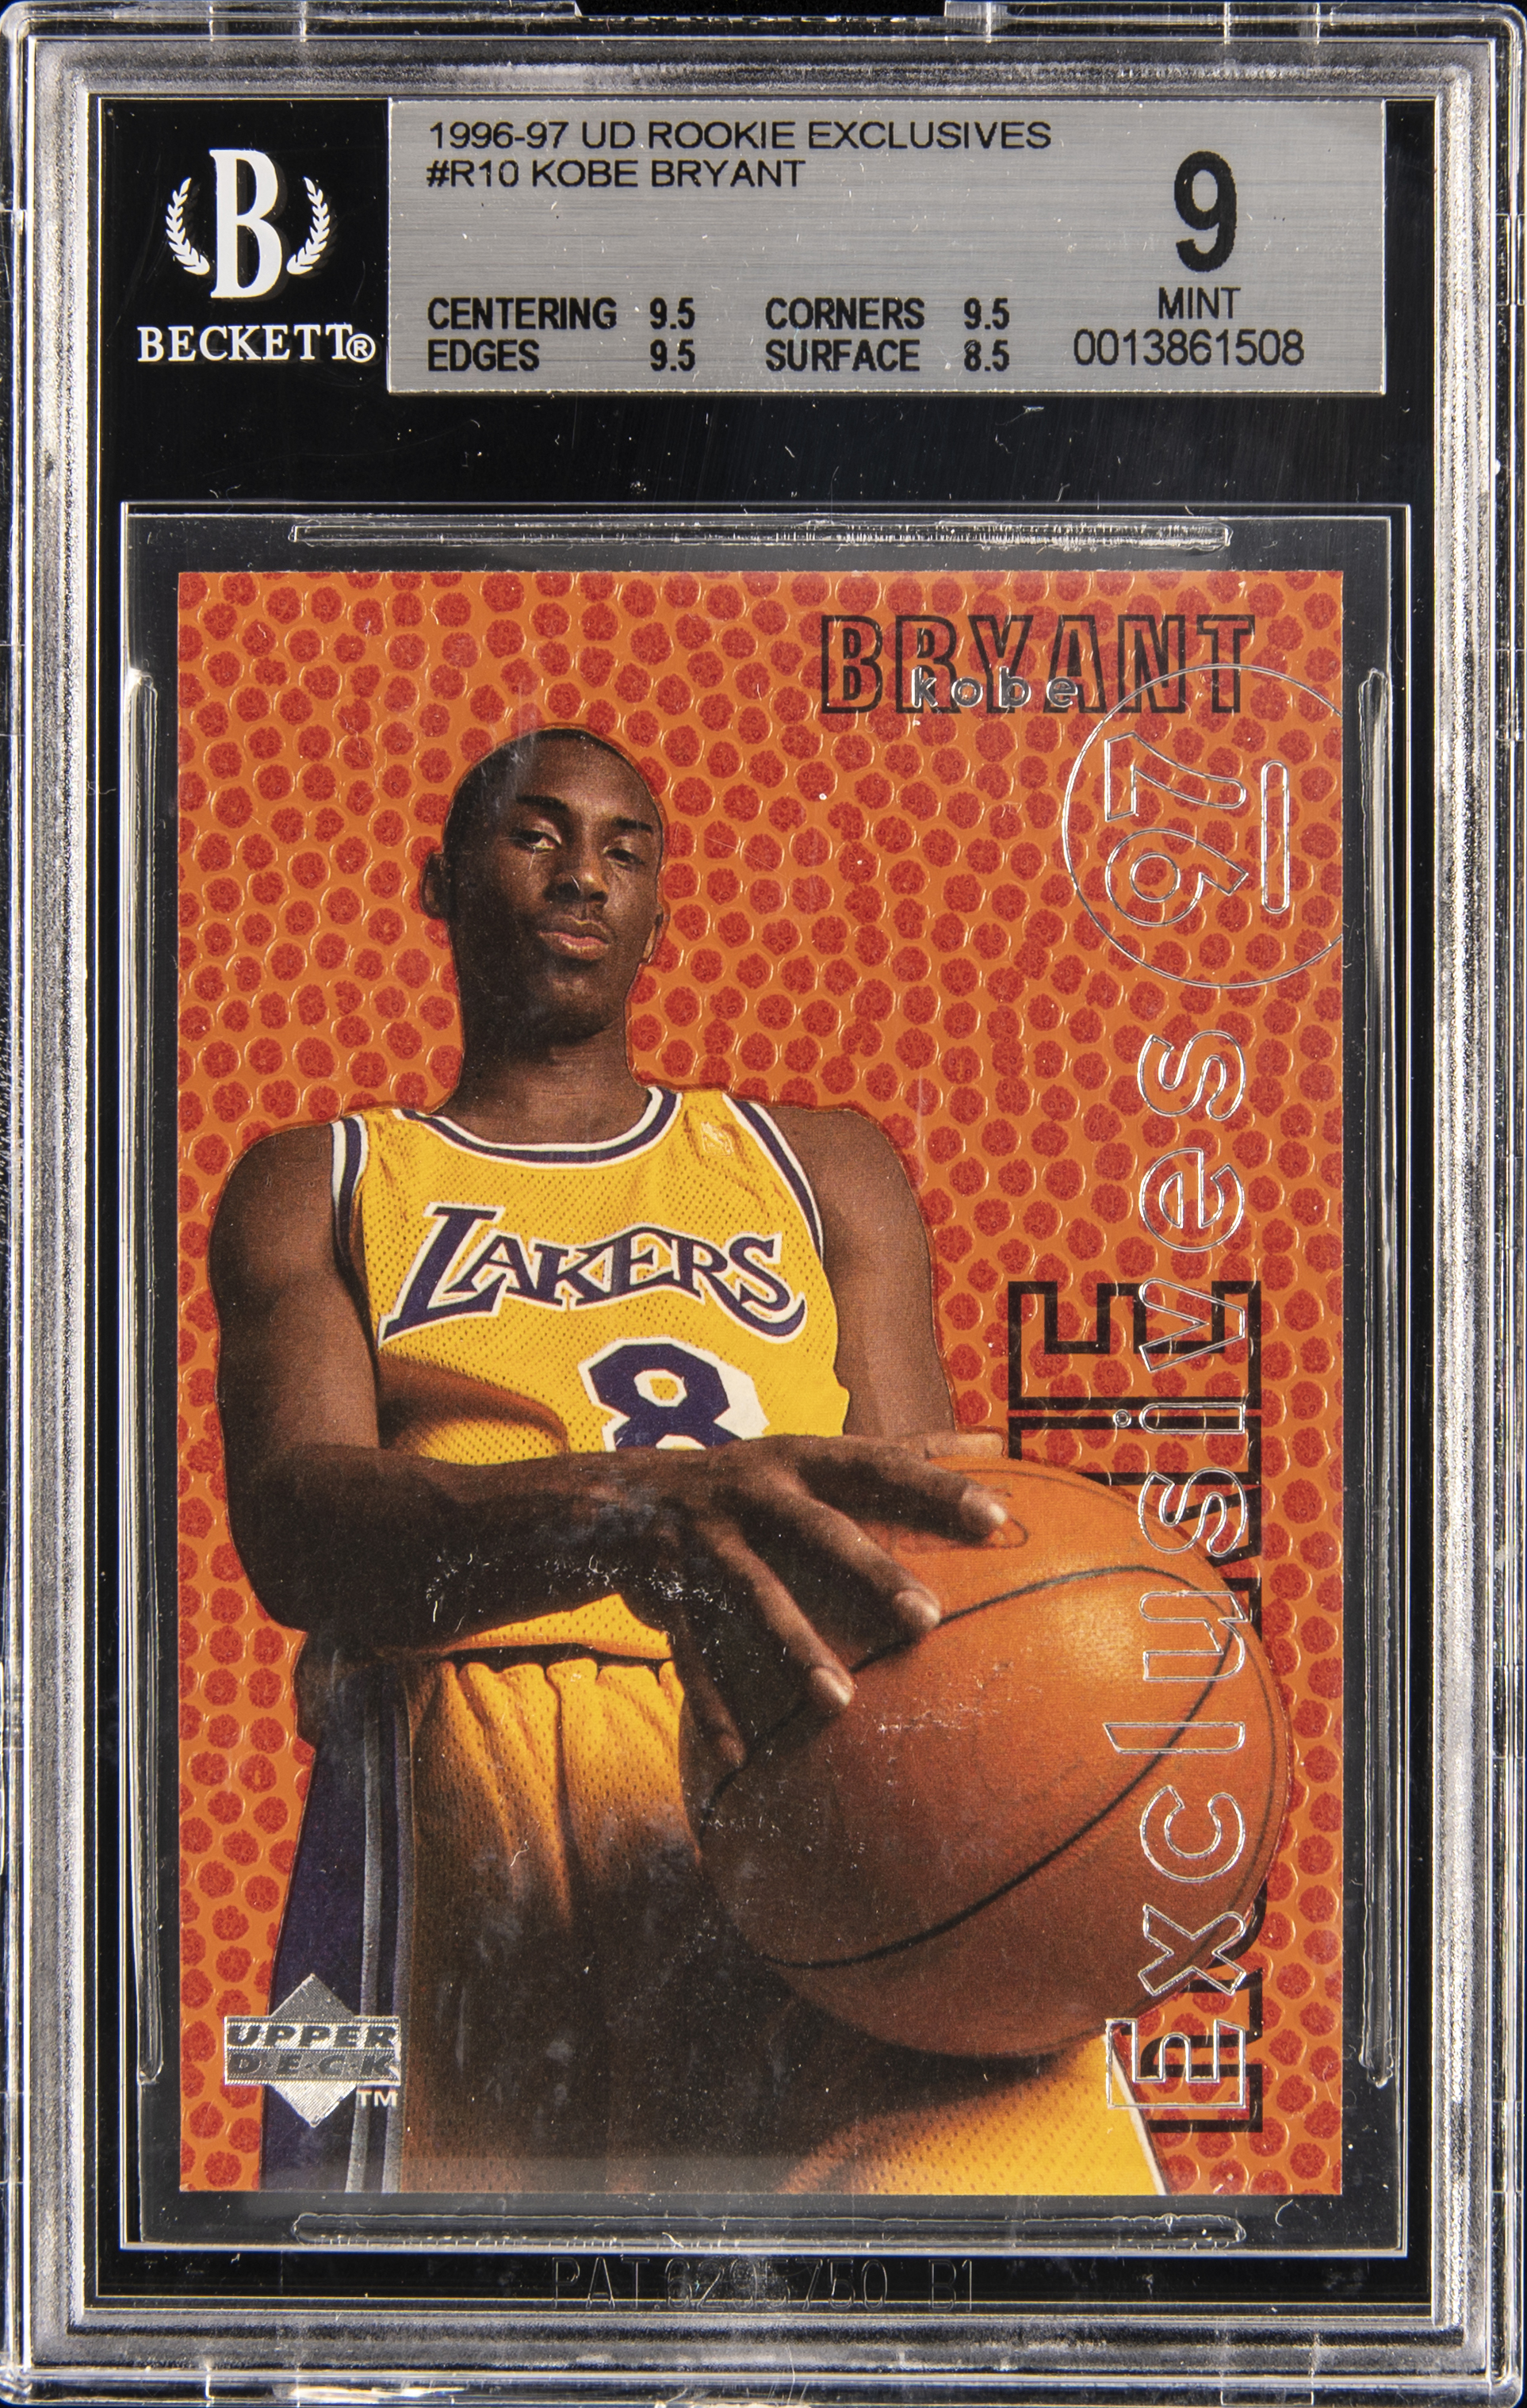 1996-97 Upper Deck Rookie Exclusives #R10 Kobe Bryant Rookie Card – BGS MINT 9